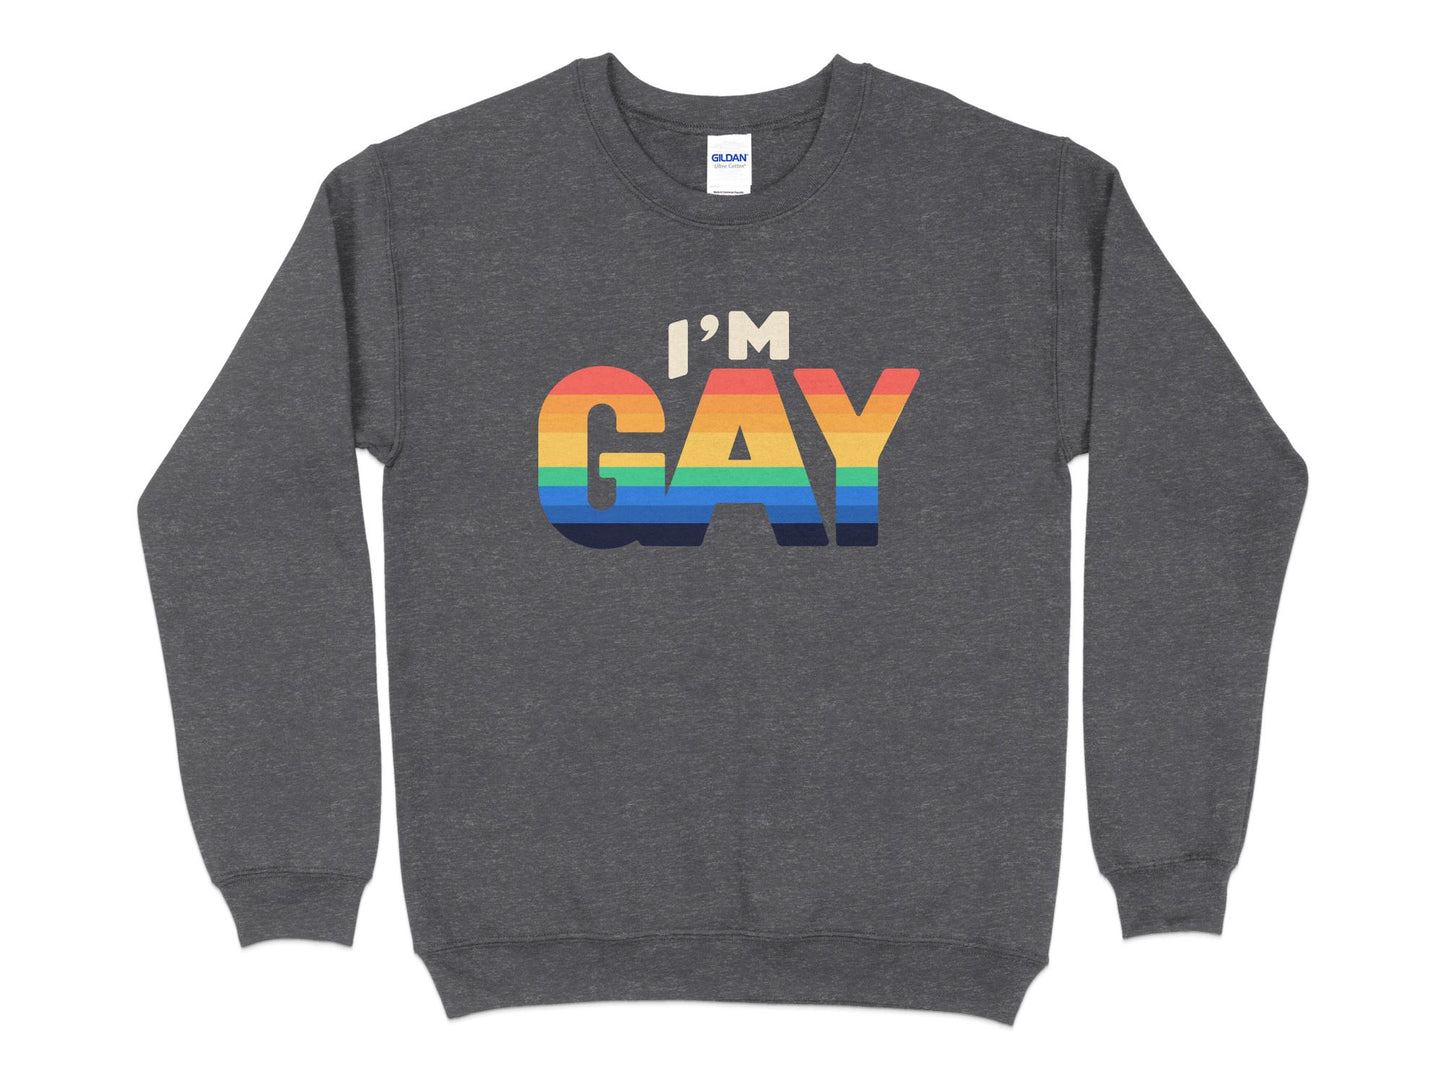 I'm Gay Sweatshirt, gray